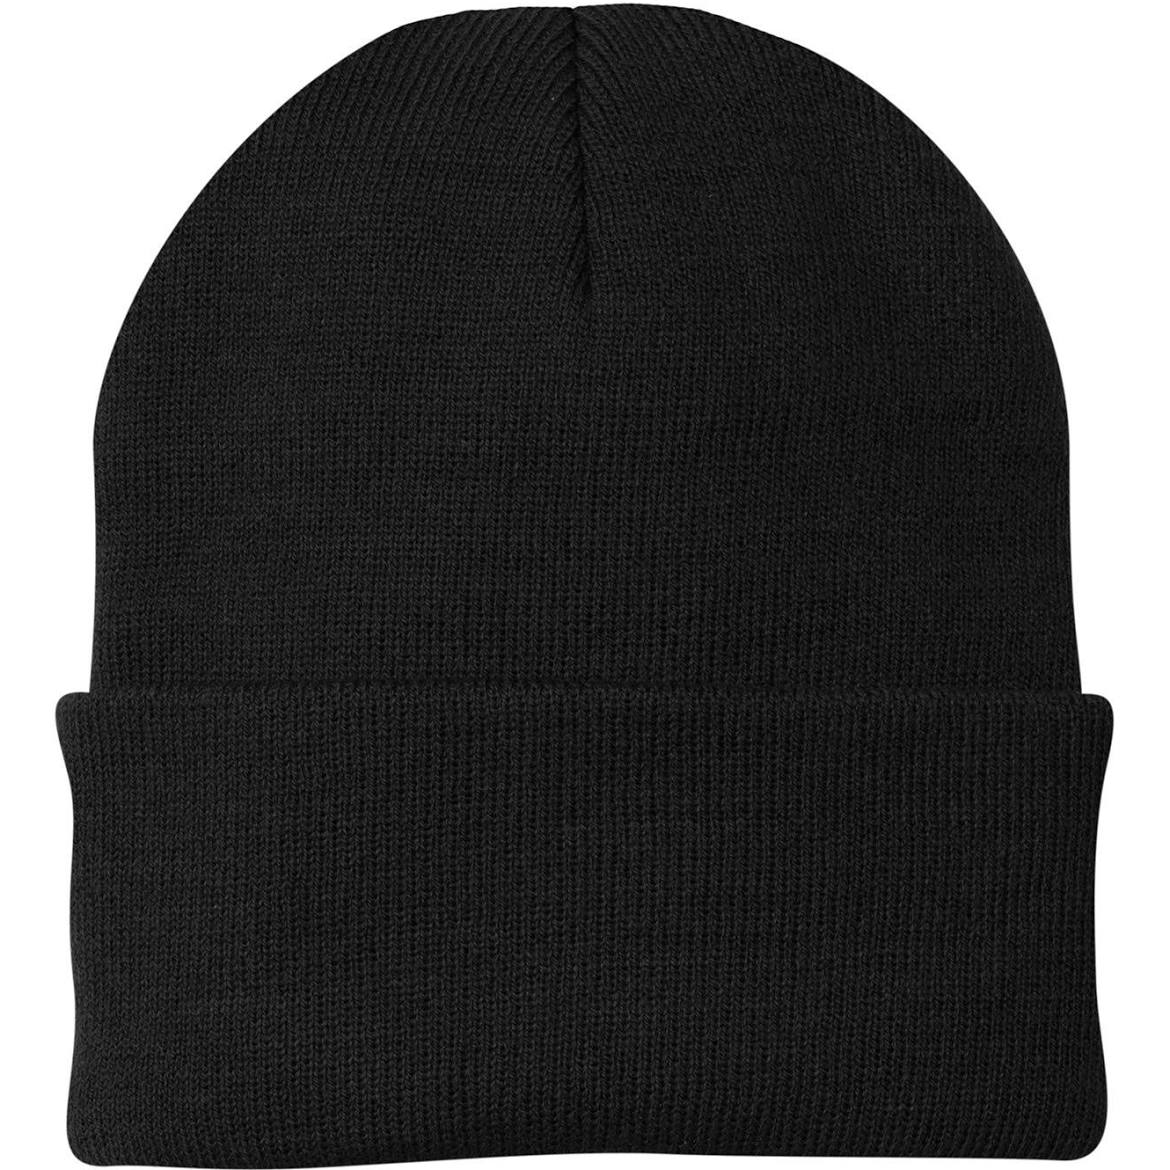 Black Knit Beanie/Hat